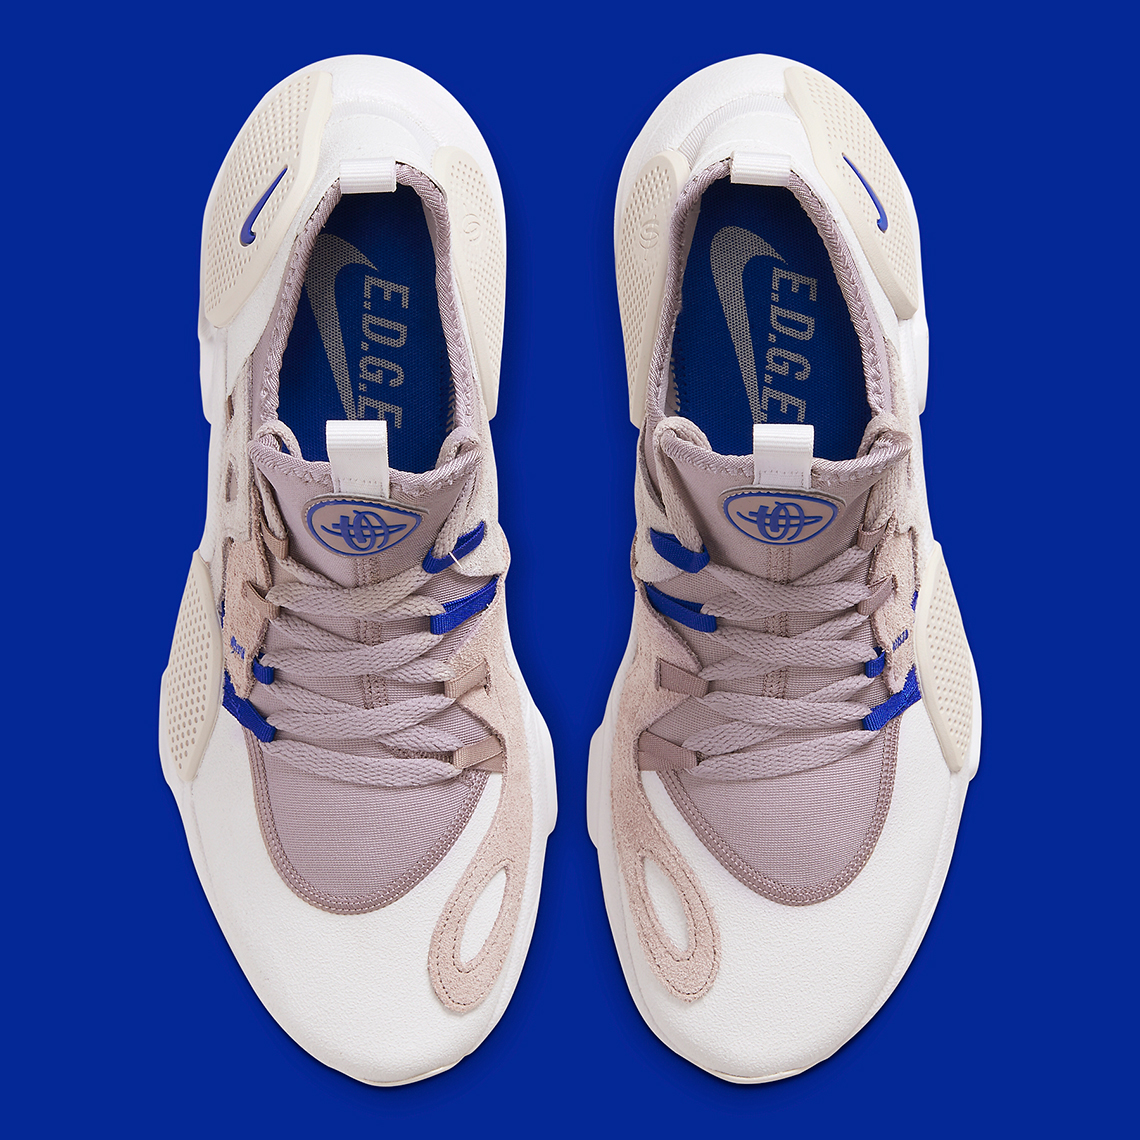 Nike Huarache Edge Txt Bq5101 200 1